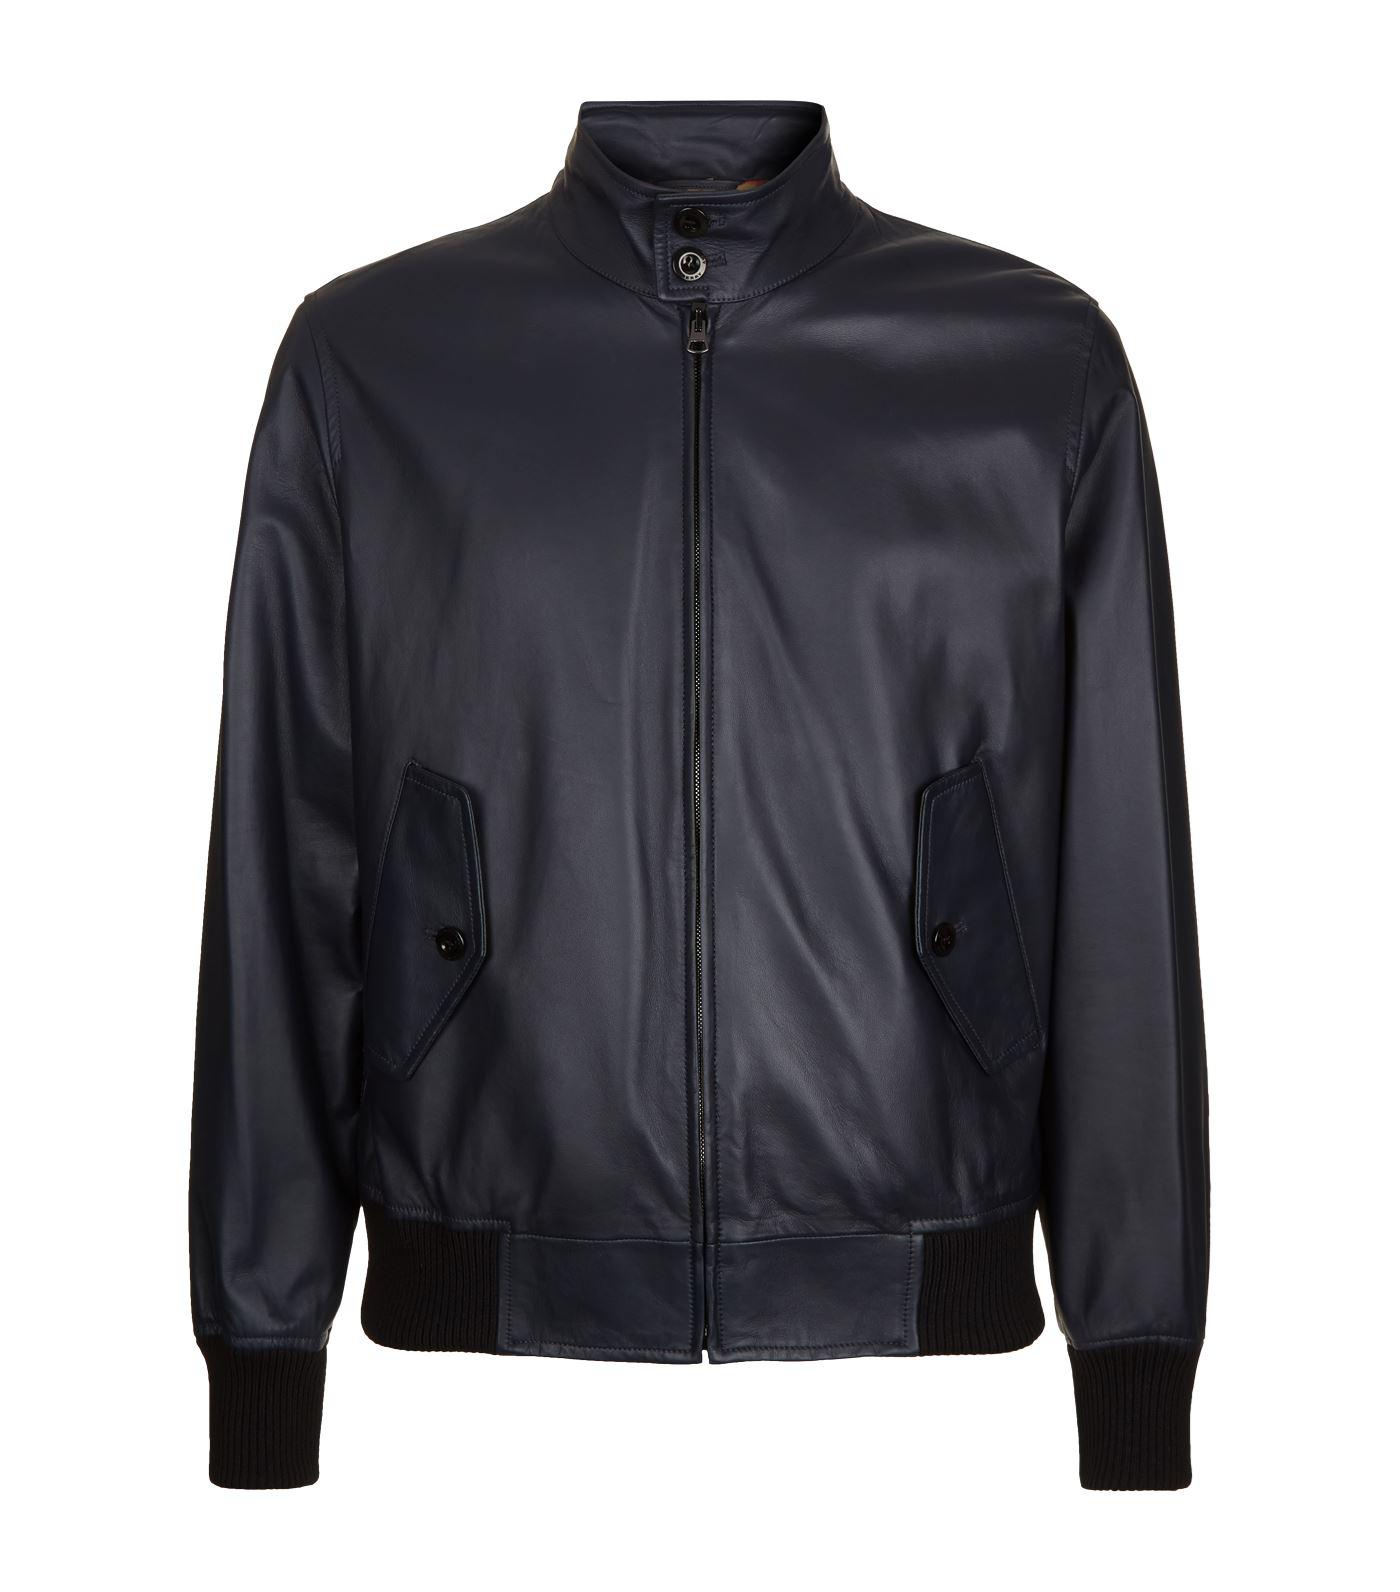 Burberry Leather Harrington Jacket in Blue for Men - Lyst